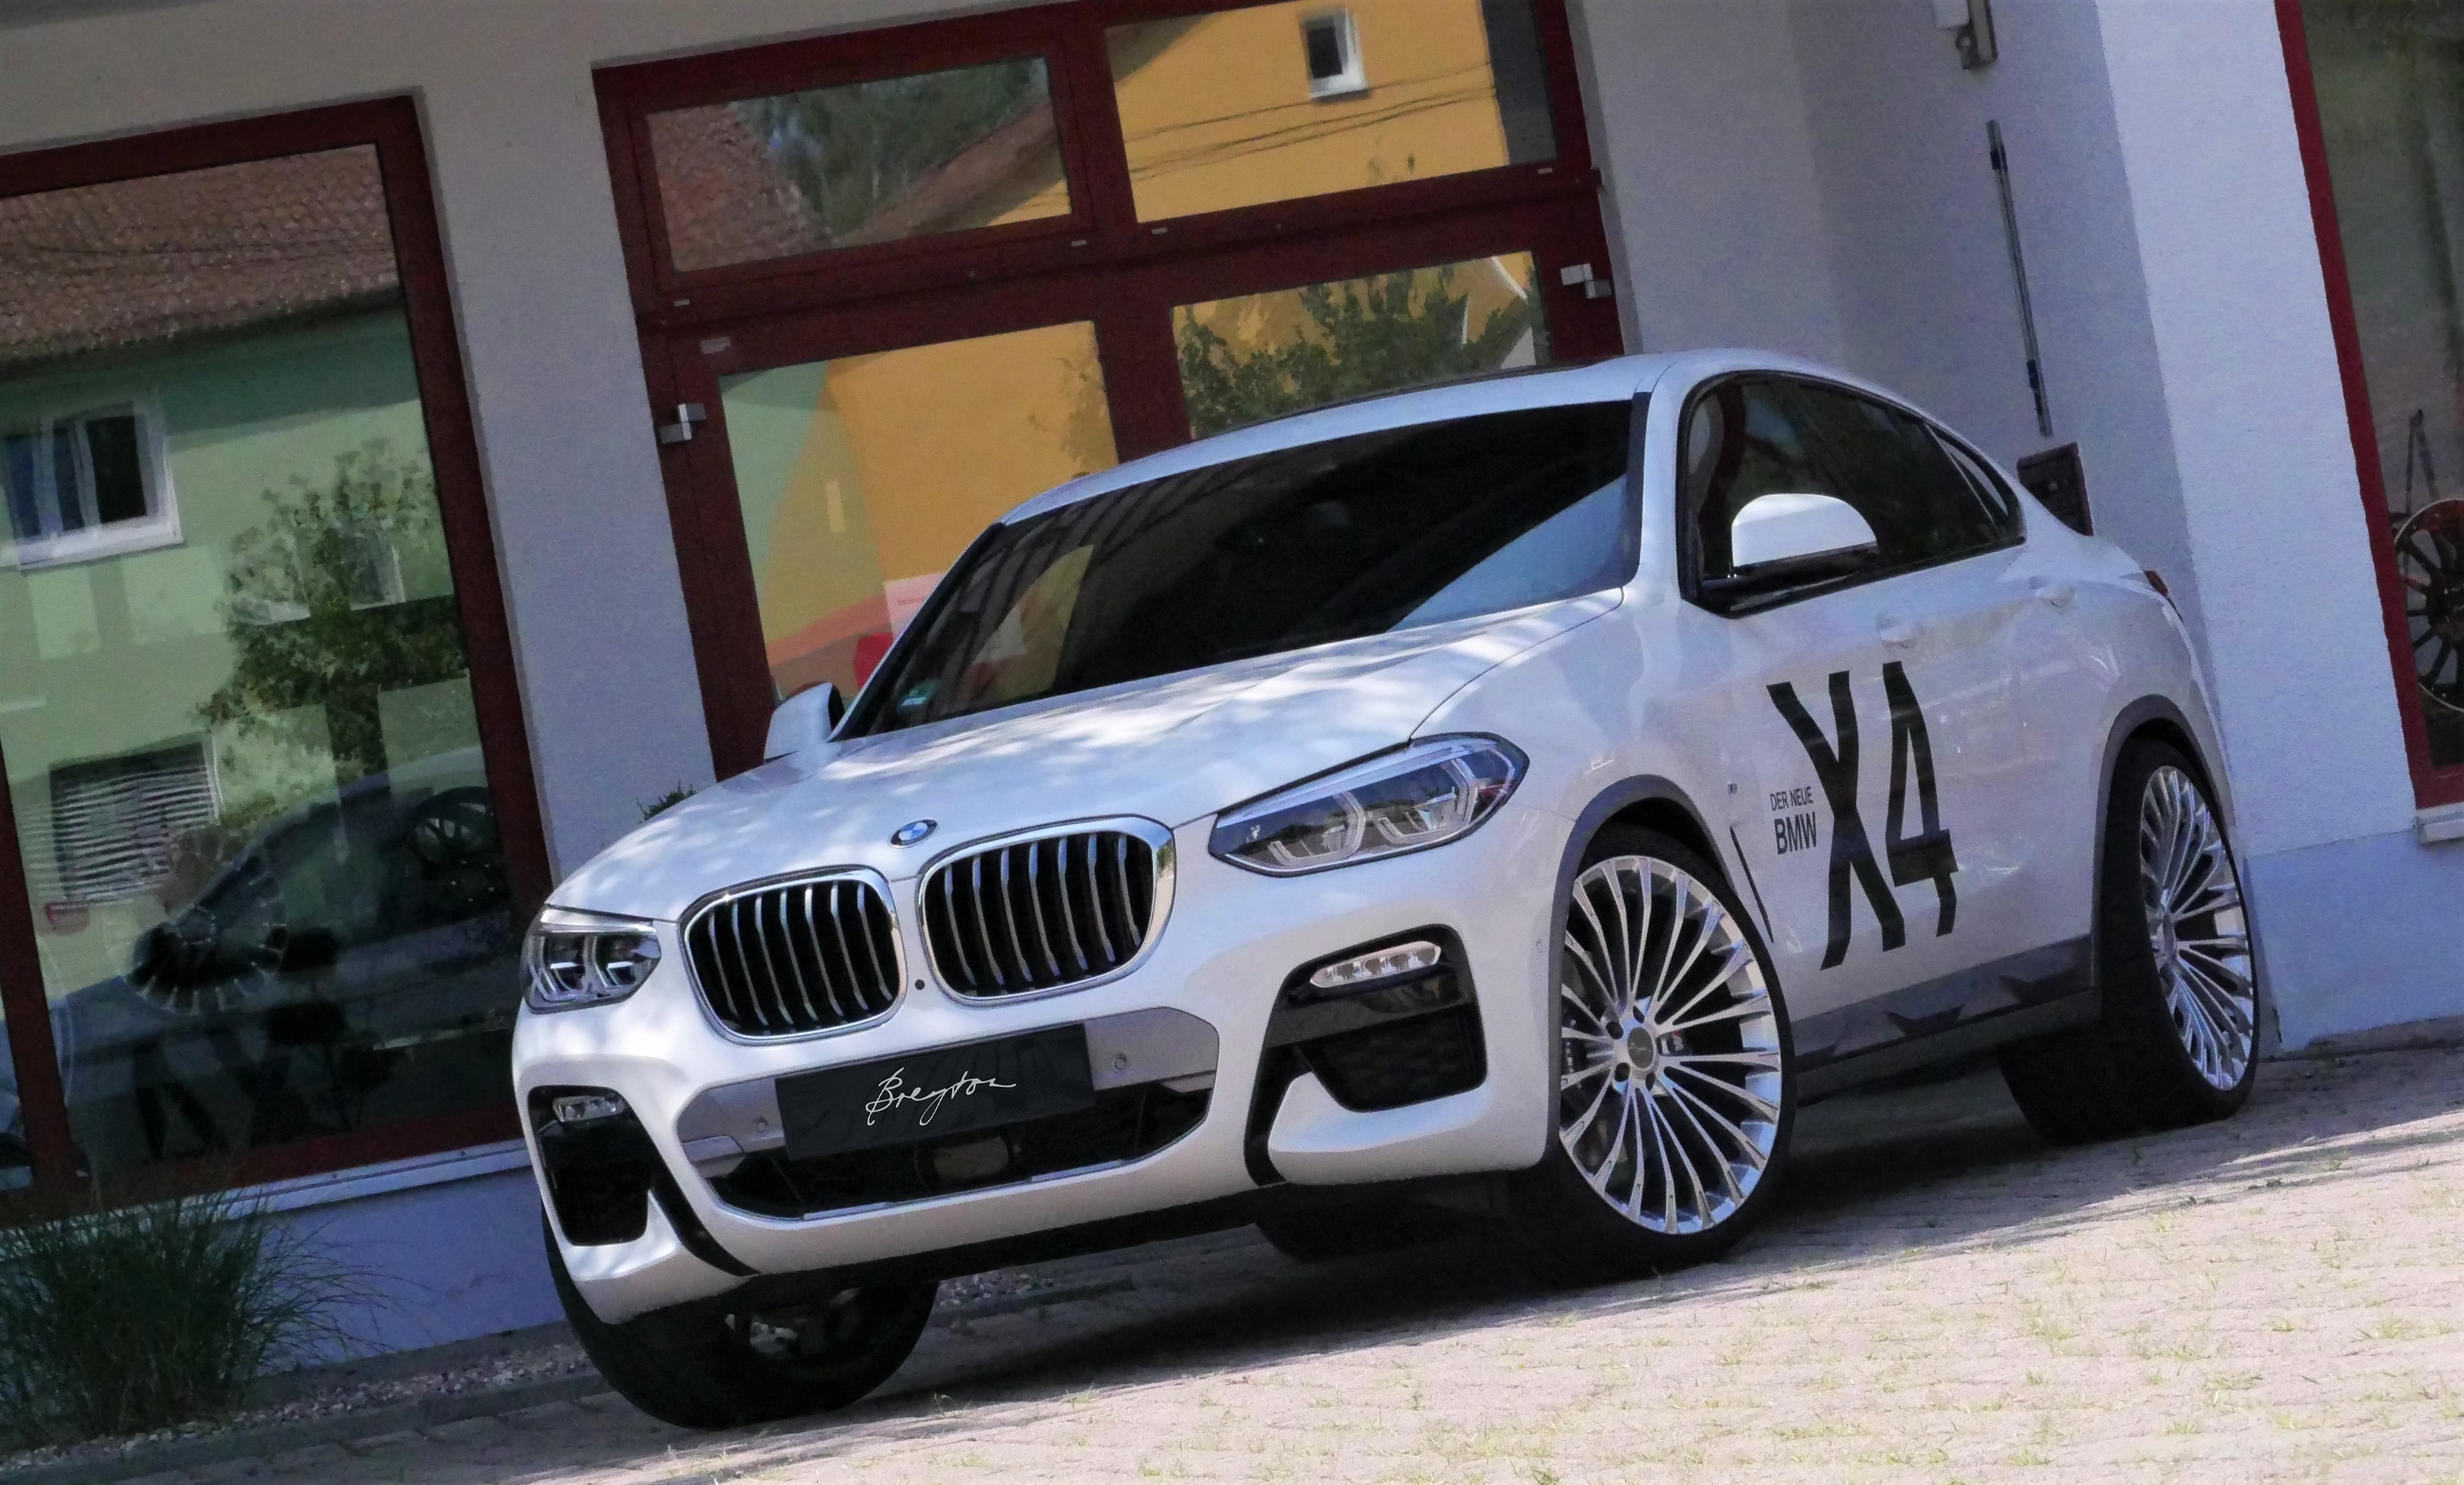 BMW X4 (G02) exterior model